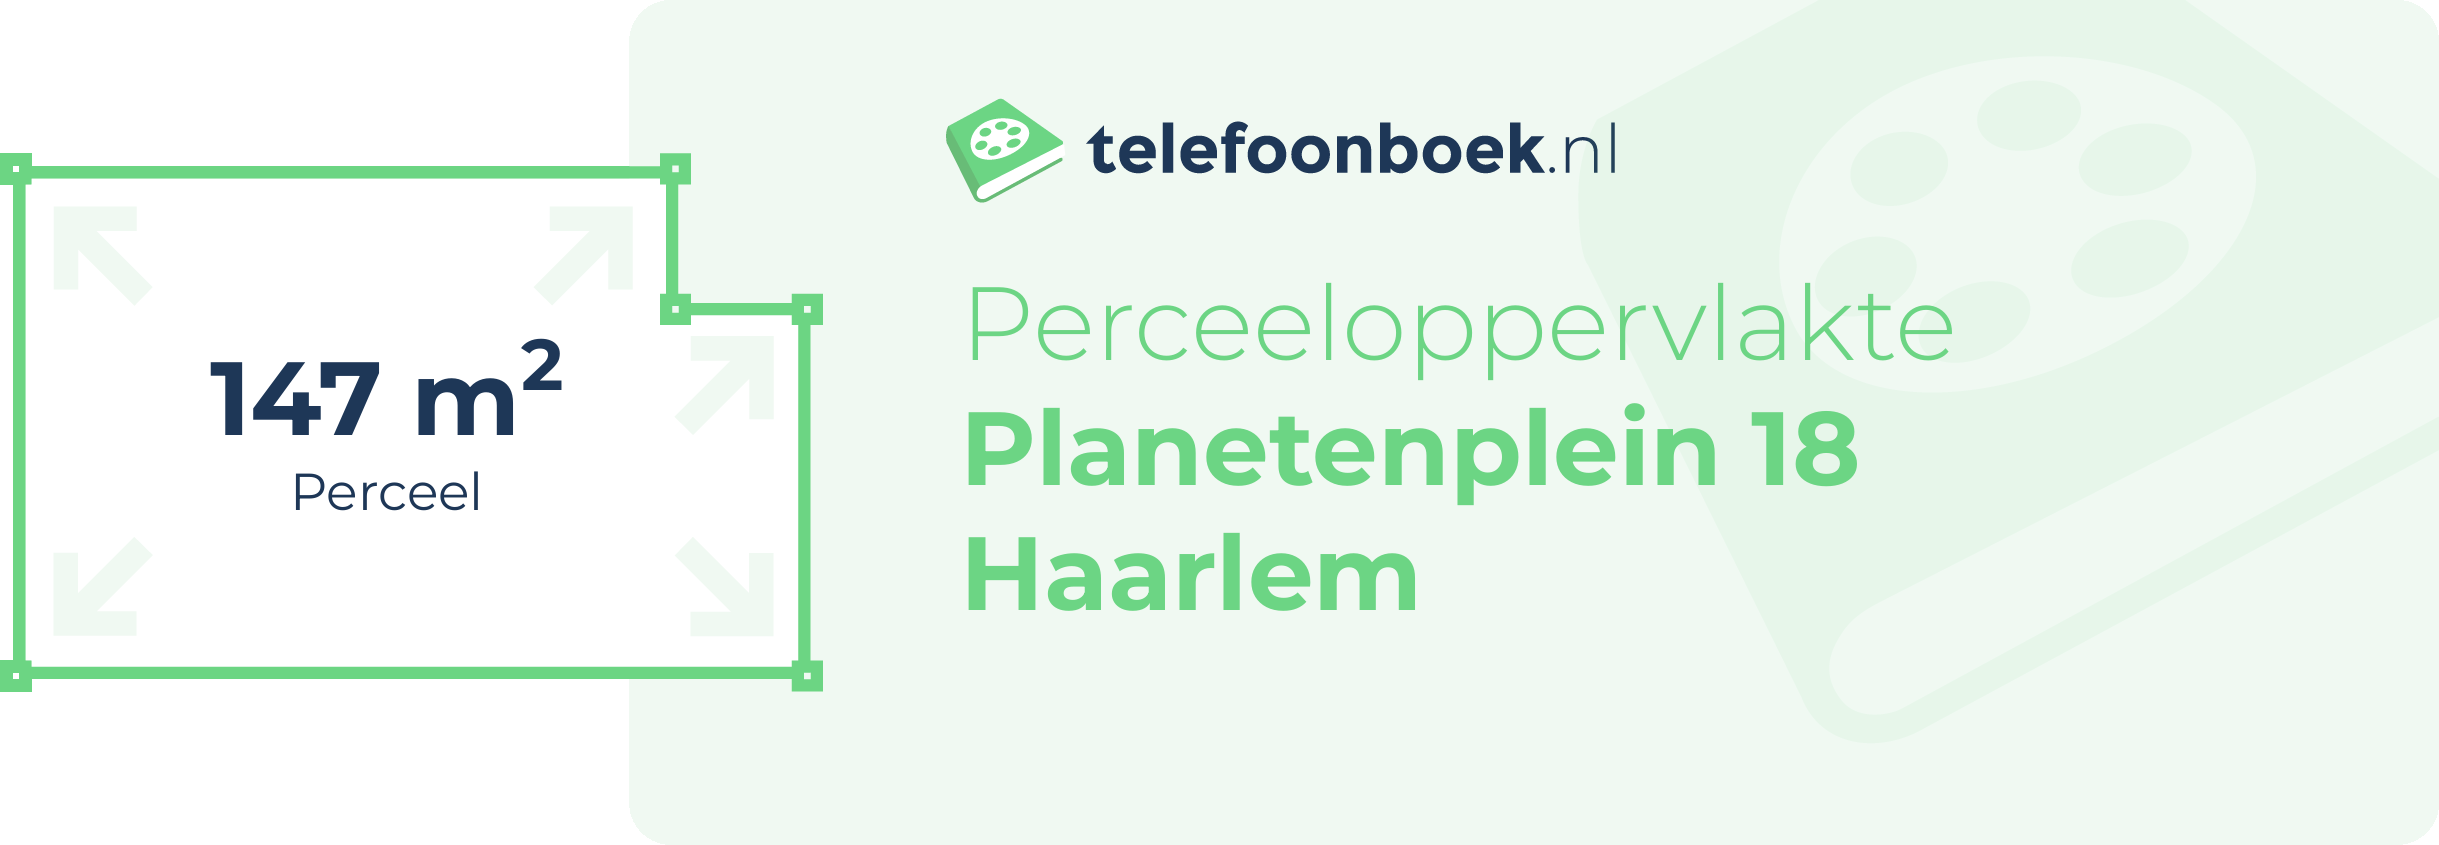 Perceeloppervlakte Planetenplein 18 Haarlem